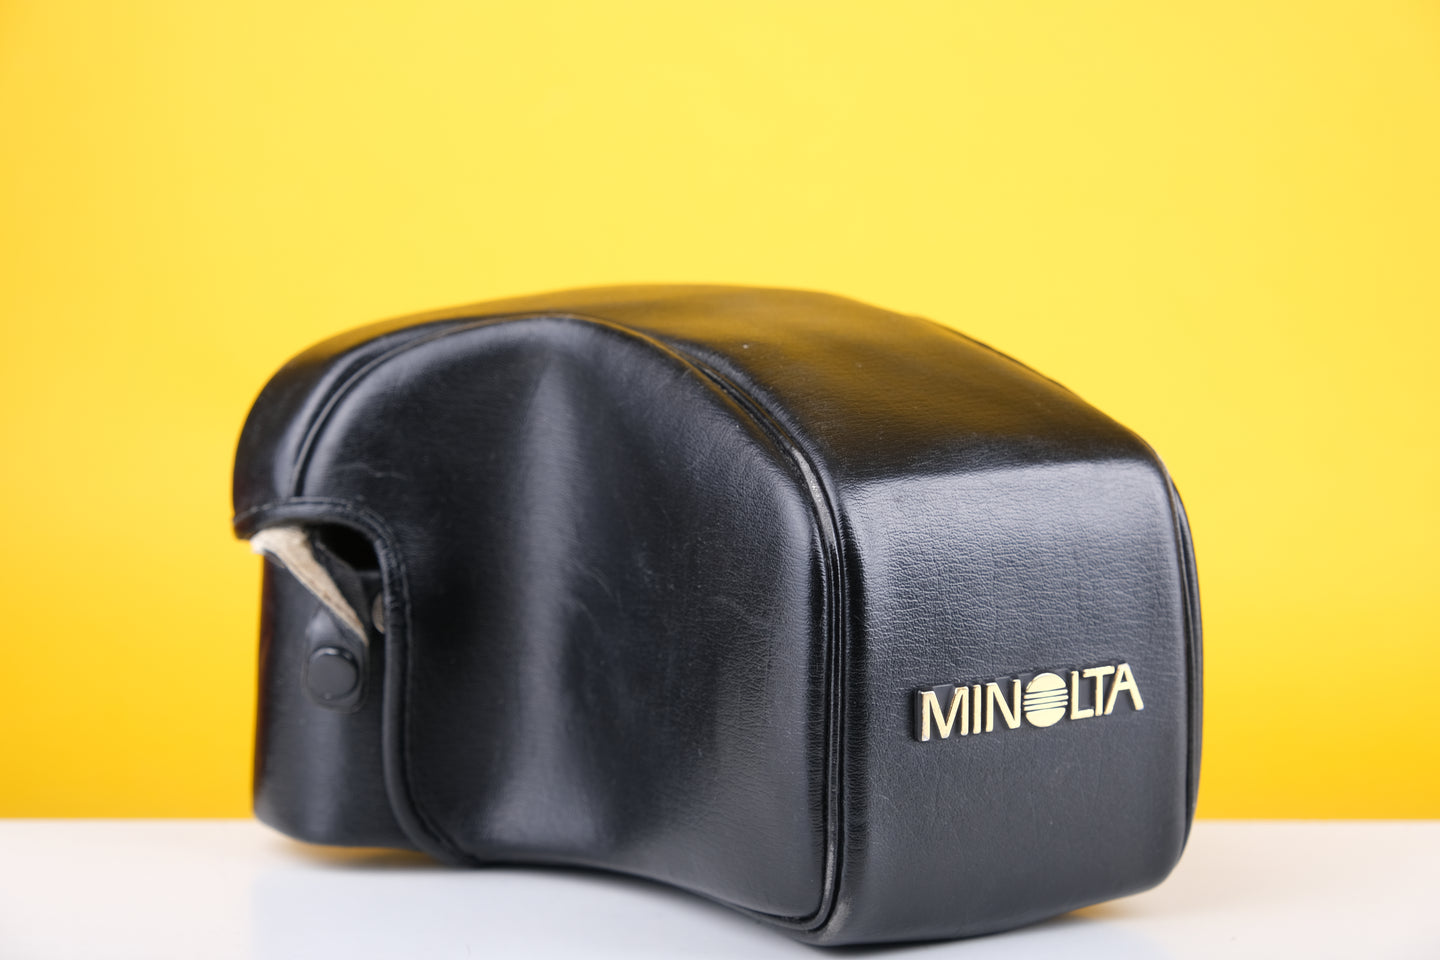 Minolta Camera Black Leather Case